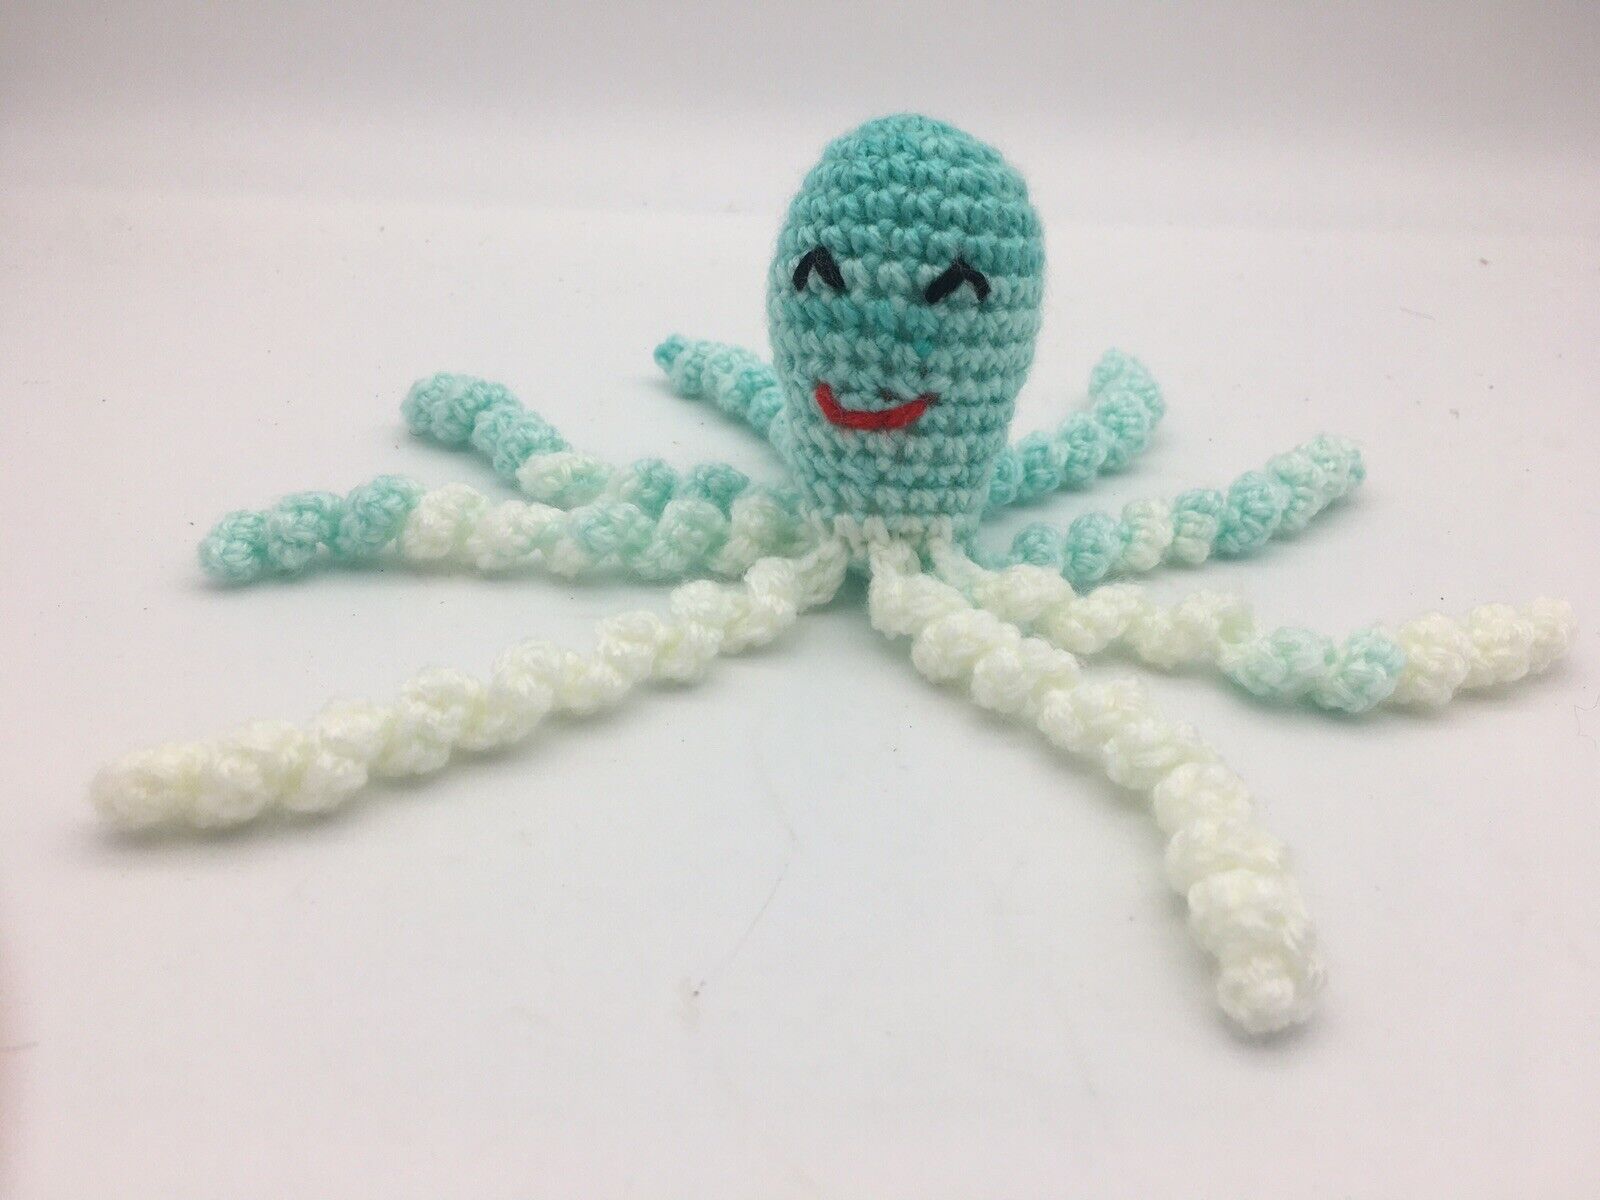 Crochet Handmade Baby Octopus Toy Preemie Lovey Newborn Factory outlet Milwaukee Mall Aqu Gift